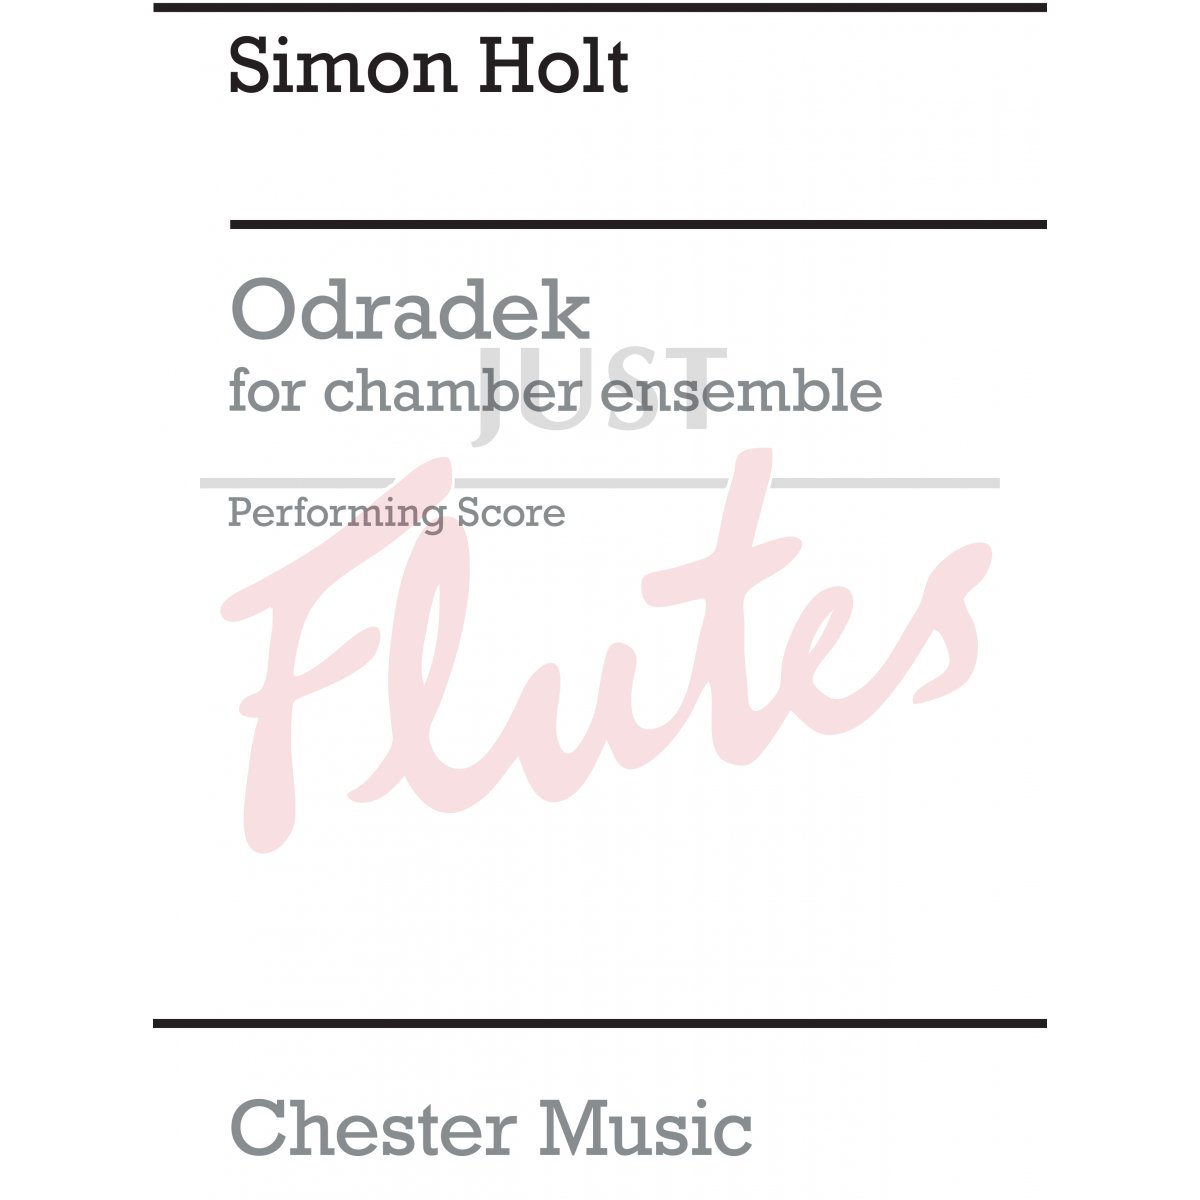 Odradek for Piccolo, Bass Flute, Trumpet and Celeste